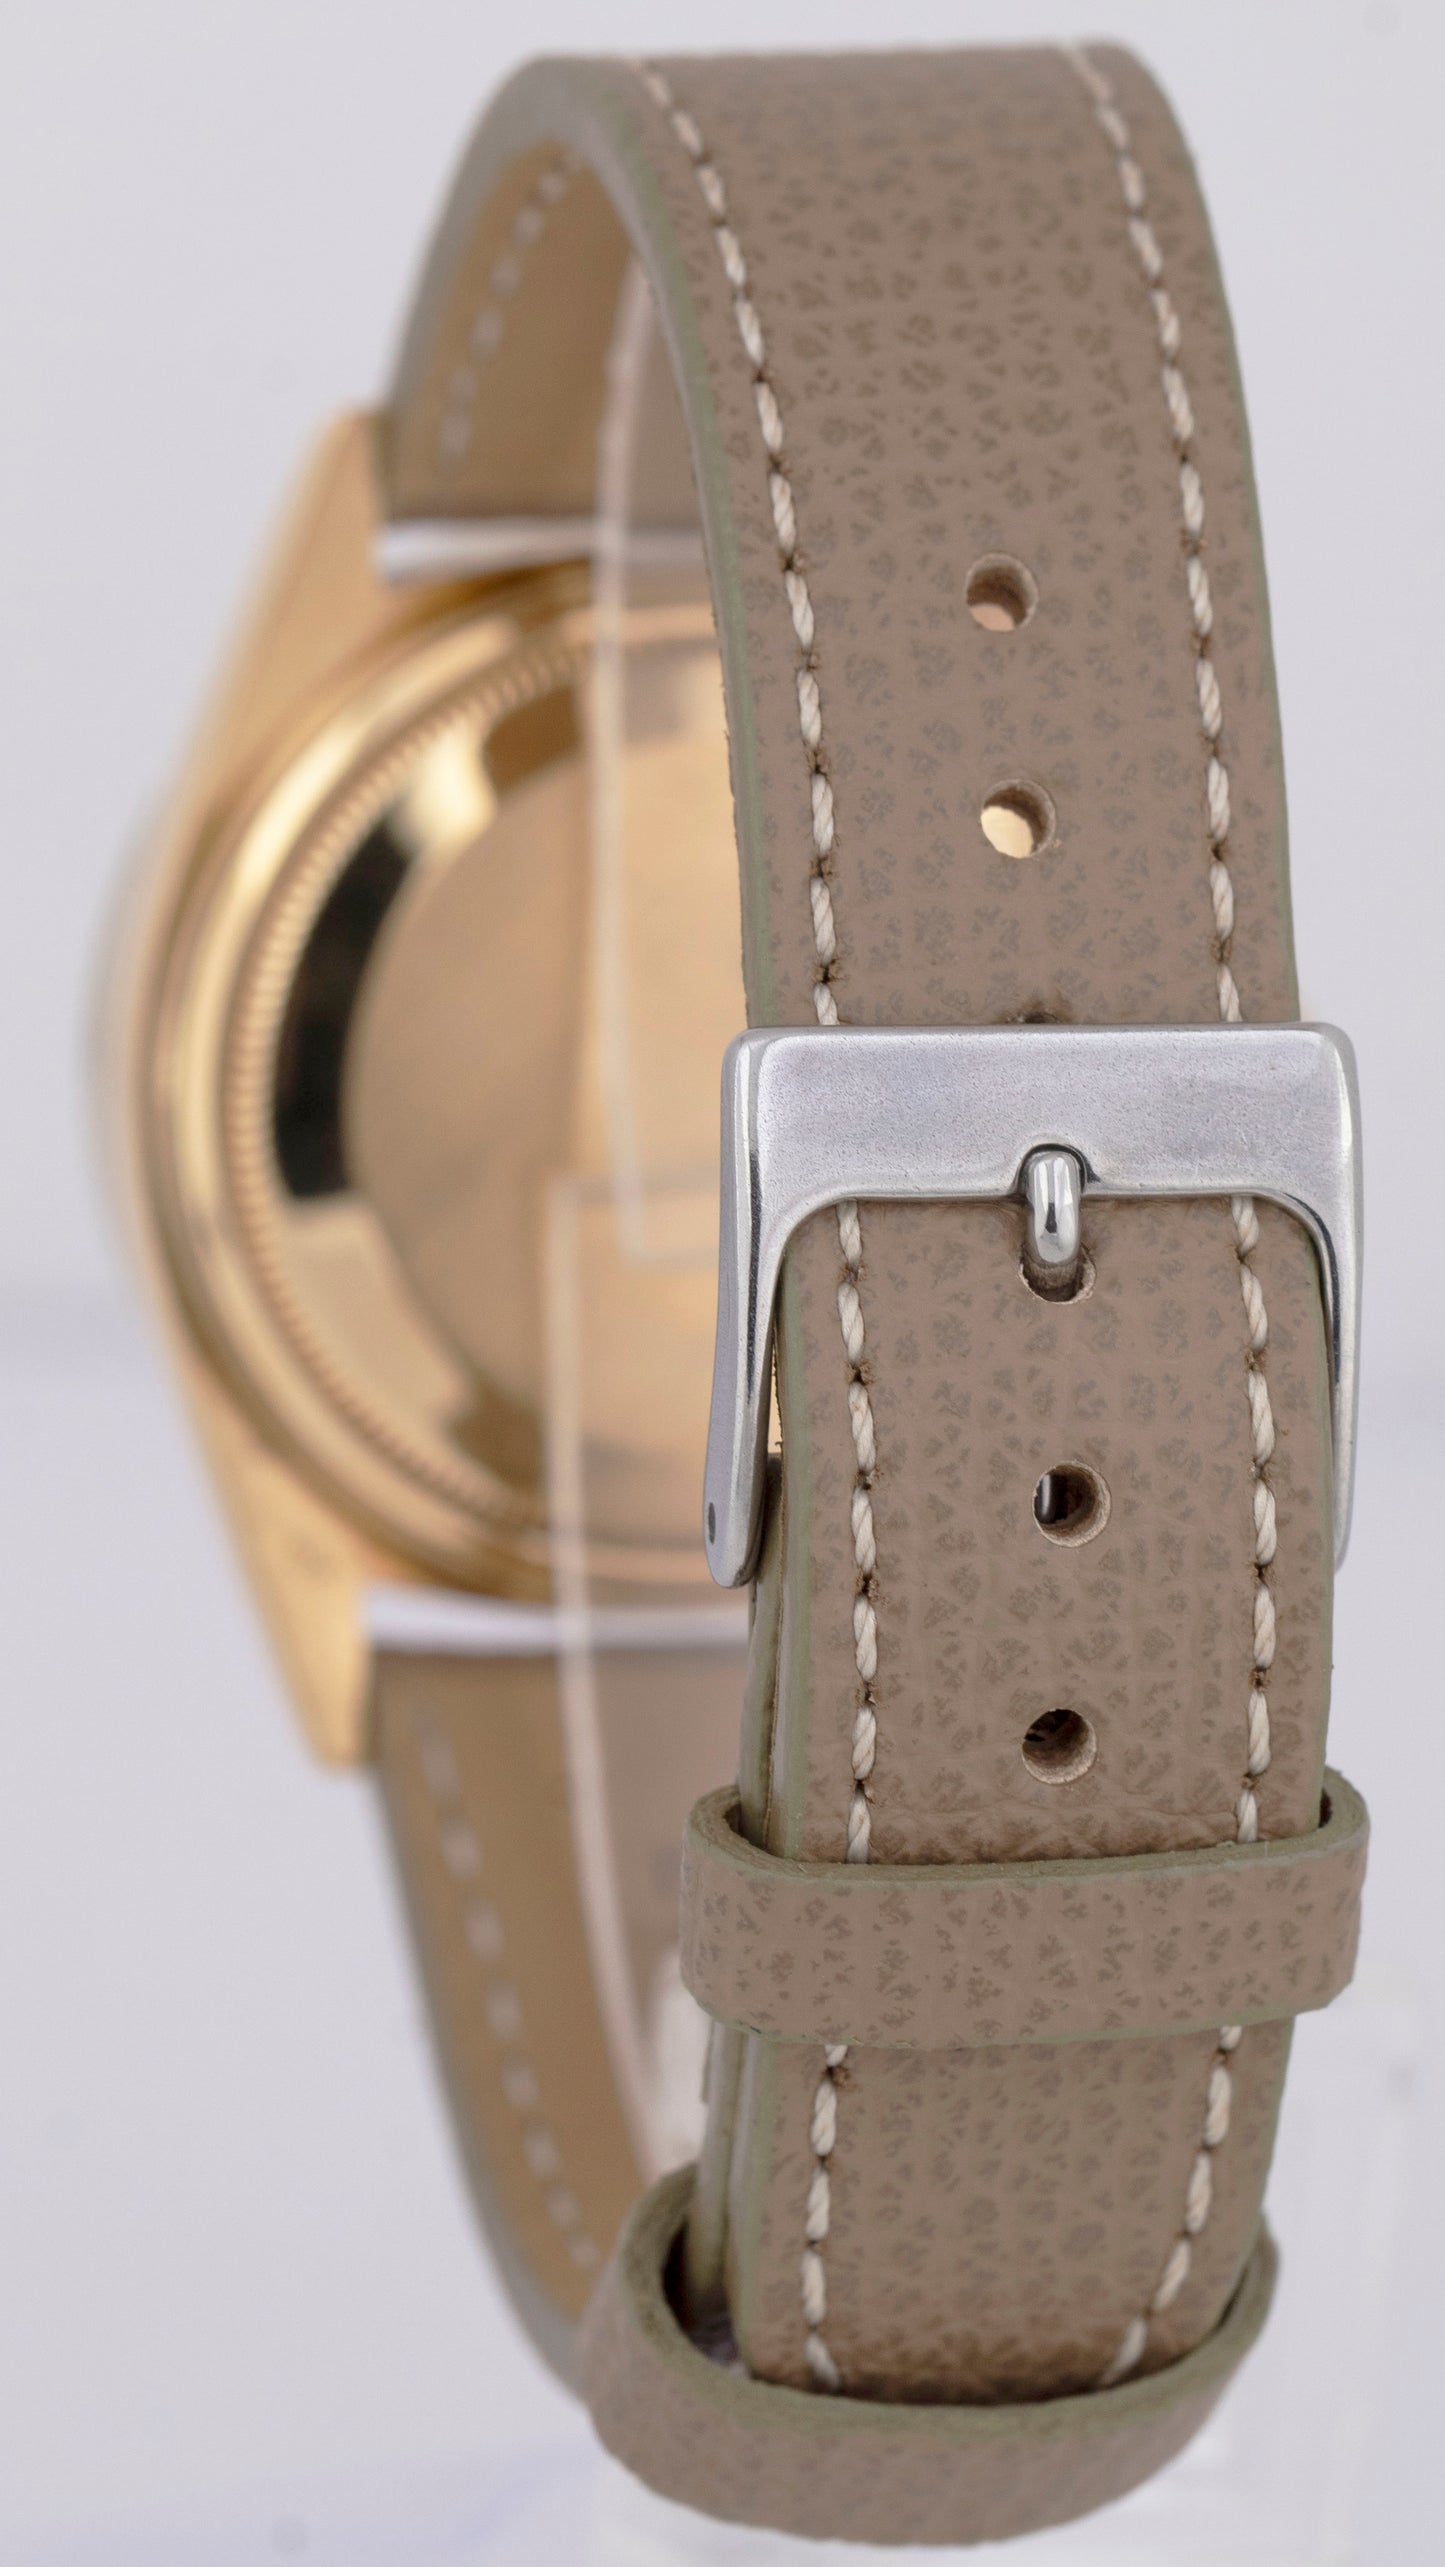 Rolex Day-Date President DIAMOND MOP 36mm 18K Yellow Gold Watch Strap 18038